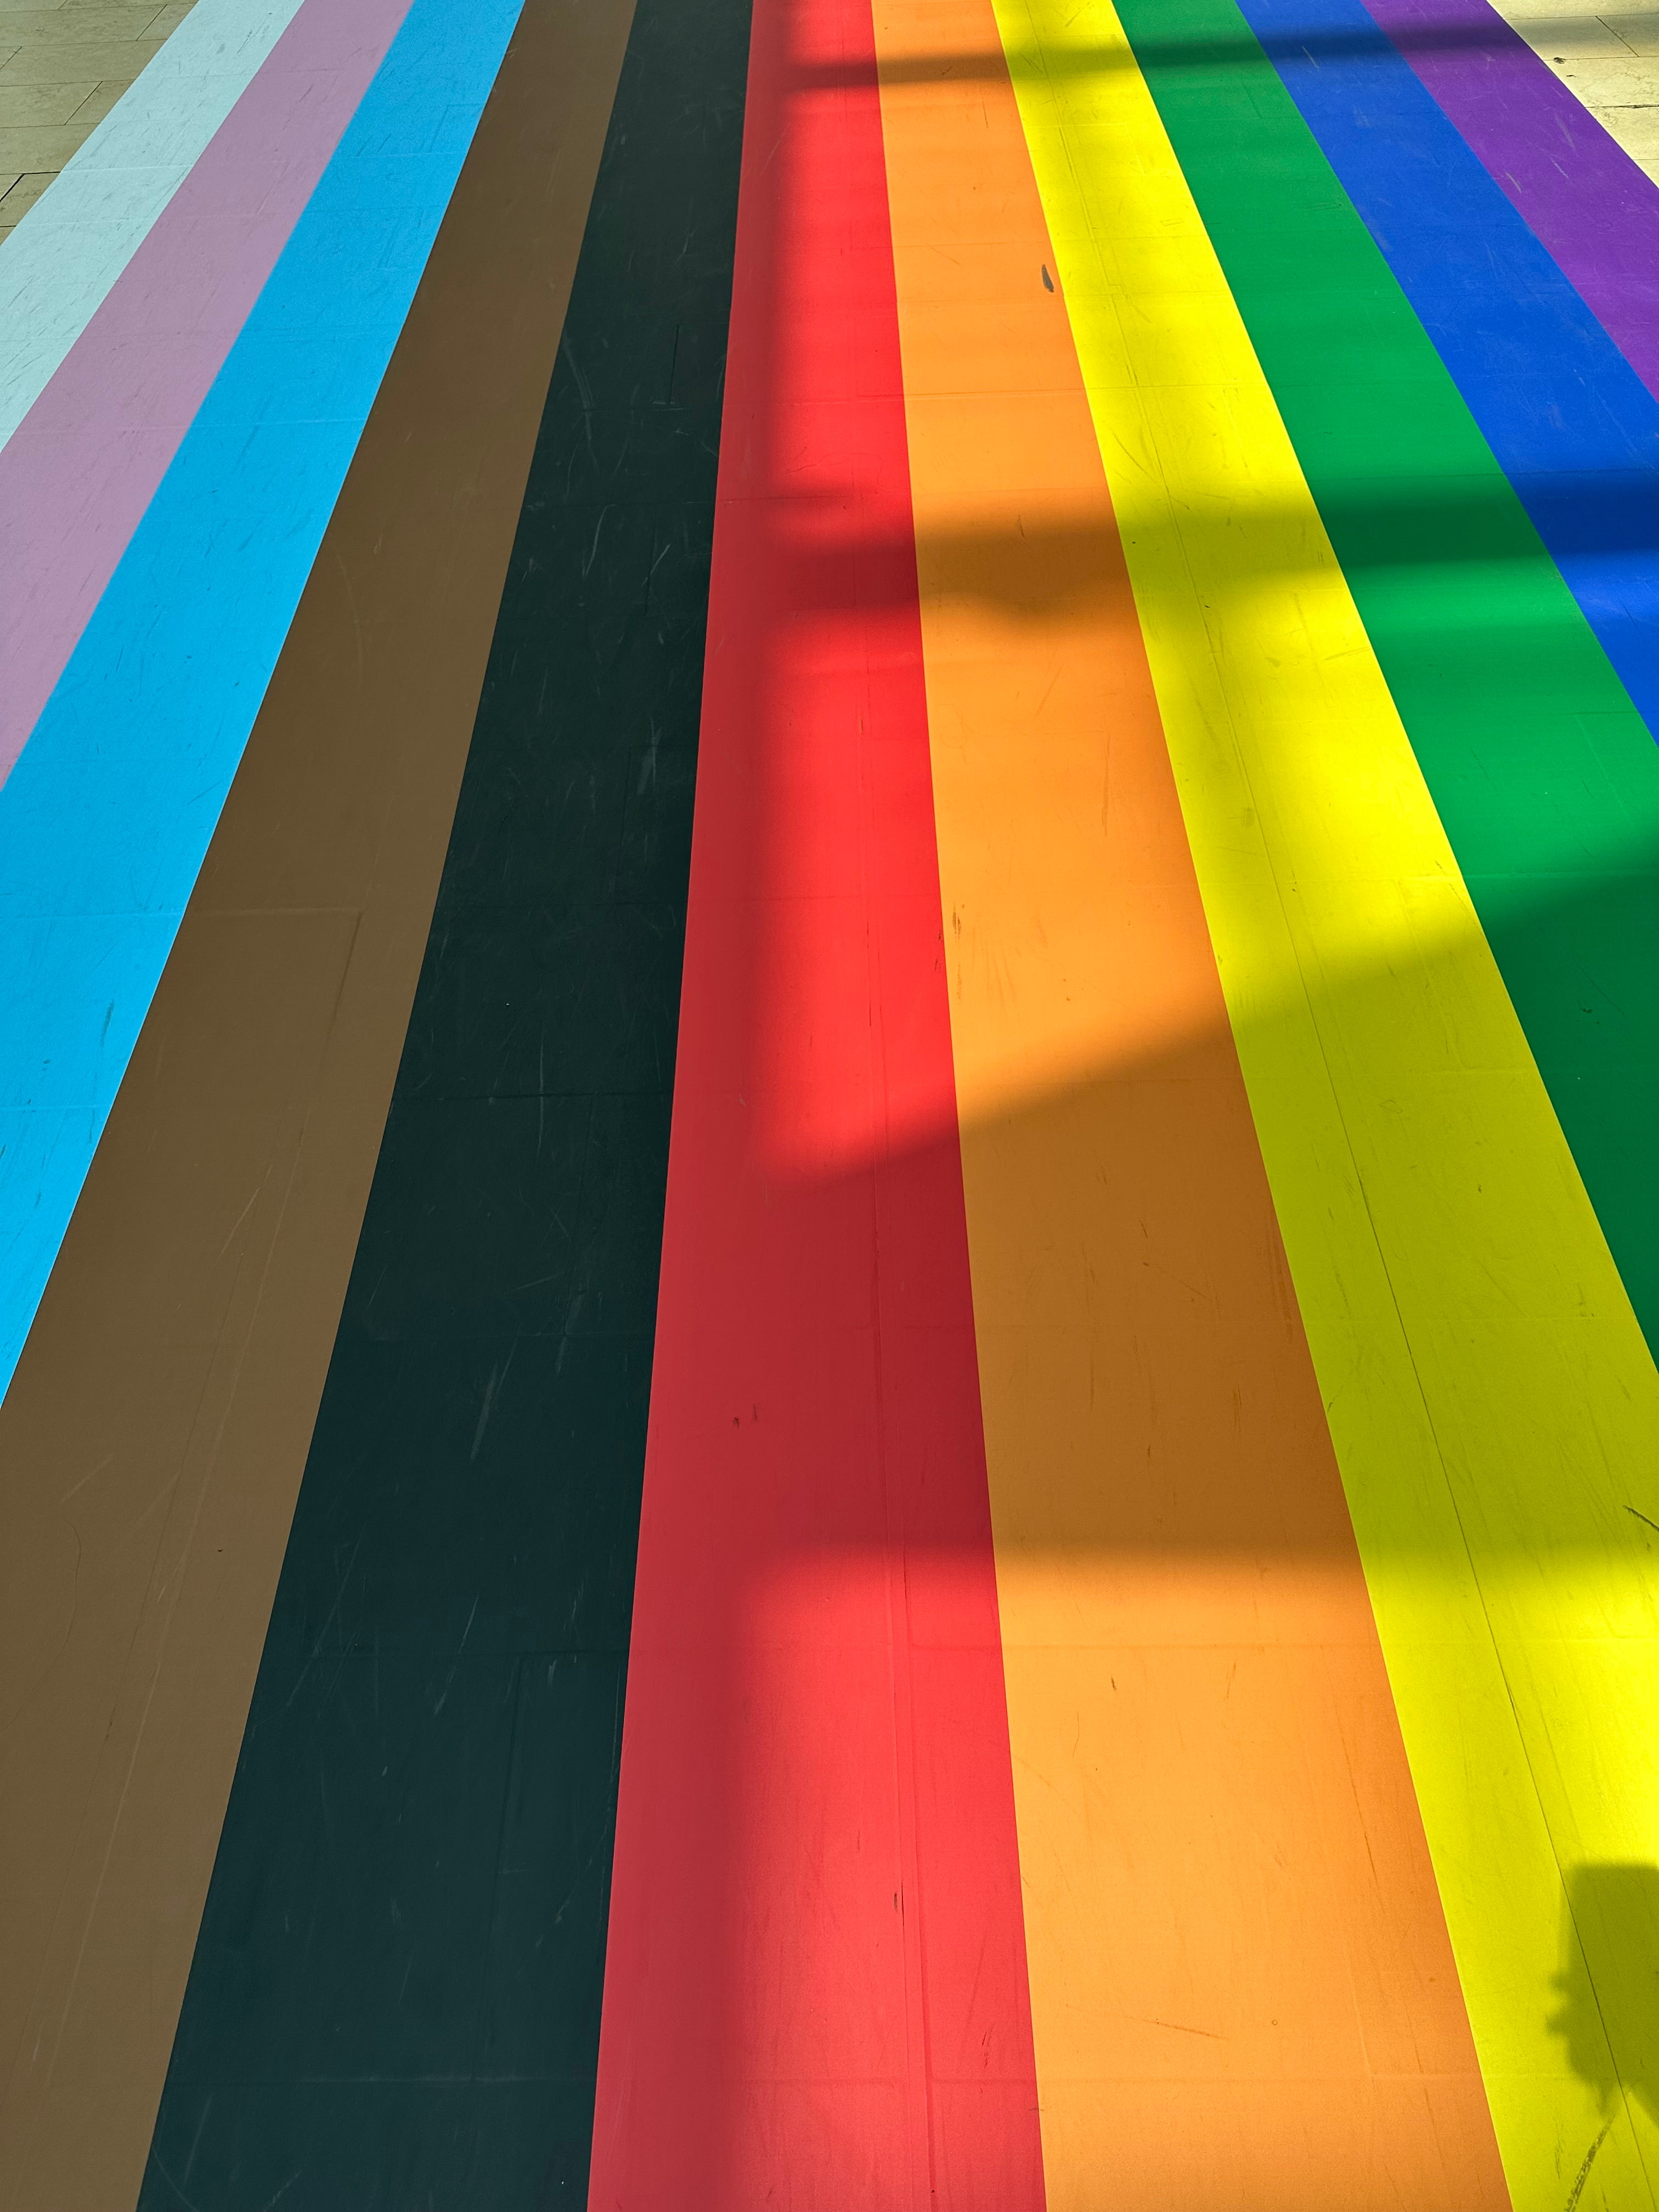 Rainbow Wall Poster